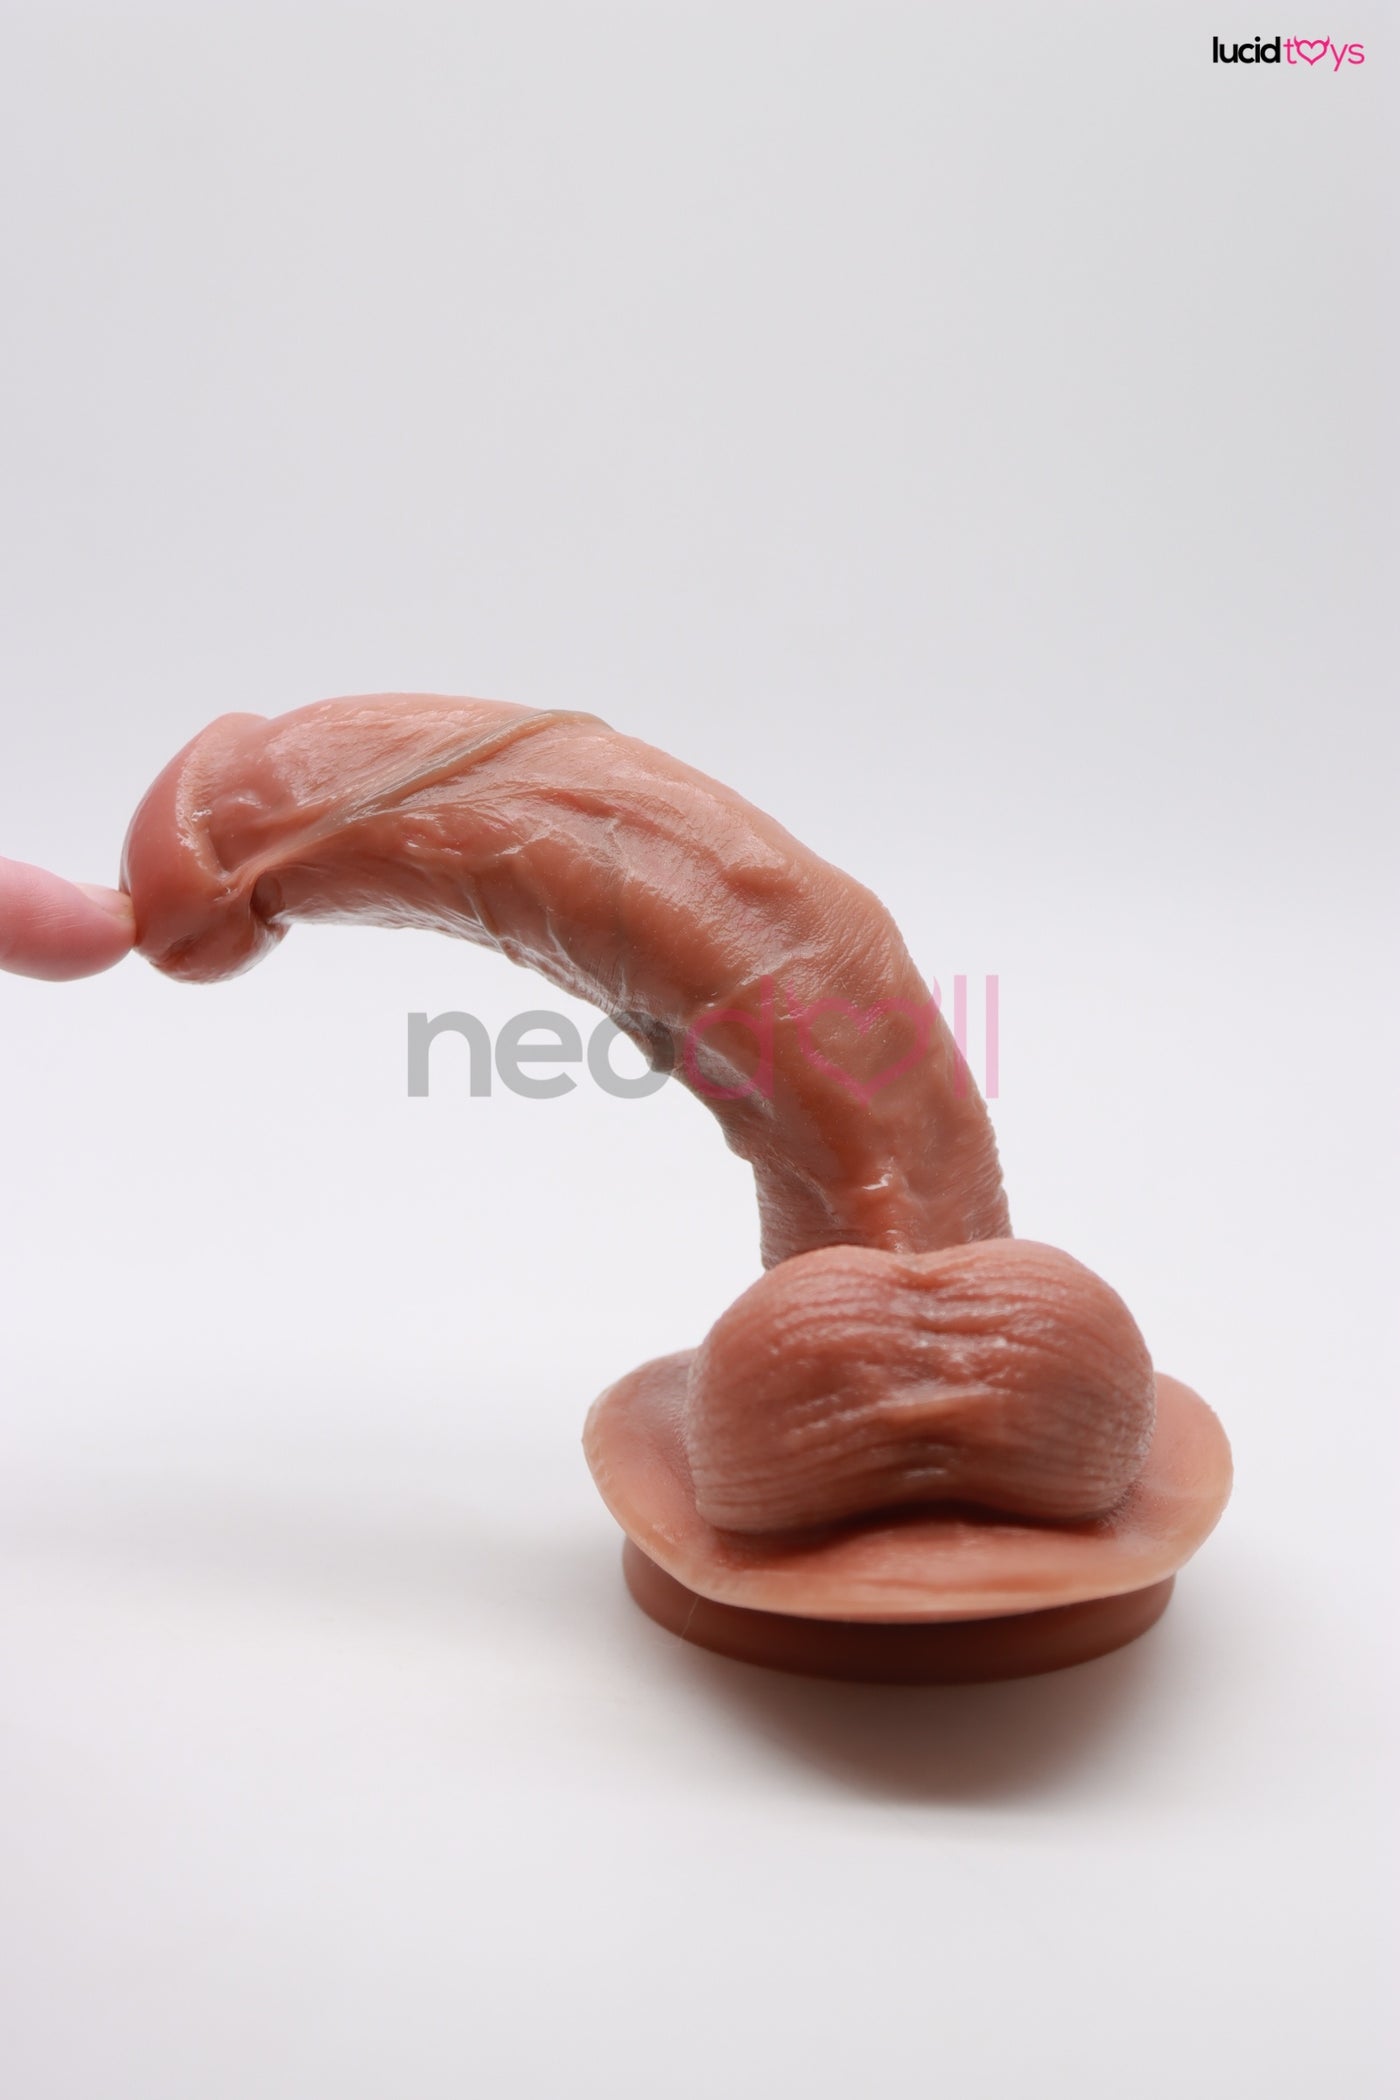 Neojoy - Realstic Silicone Dildo With Human Simulation - Dark Skin - 17 cm - 302 g